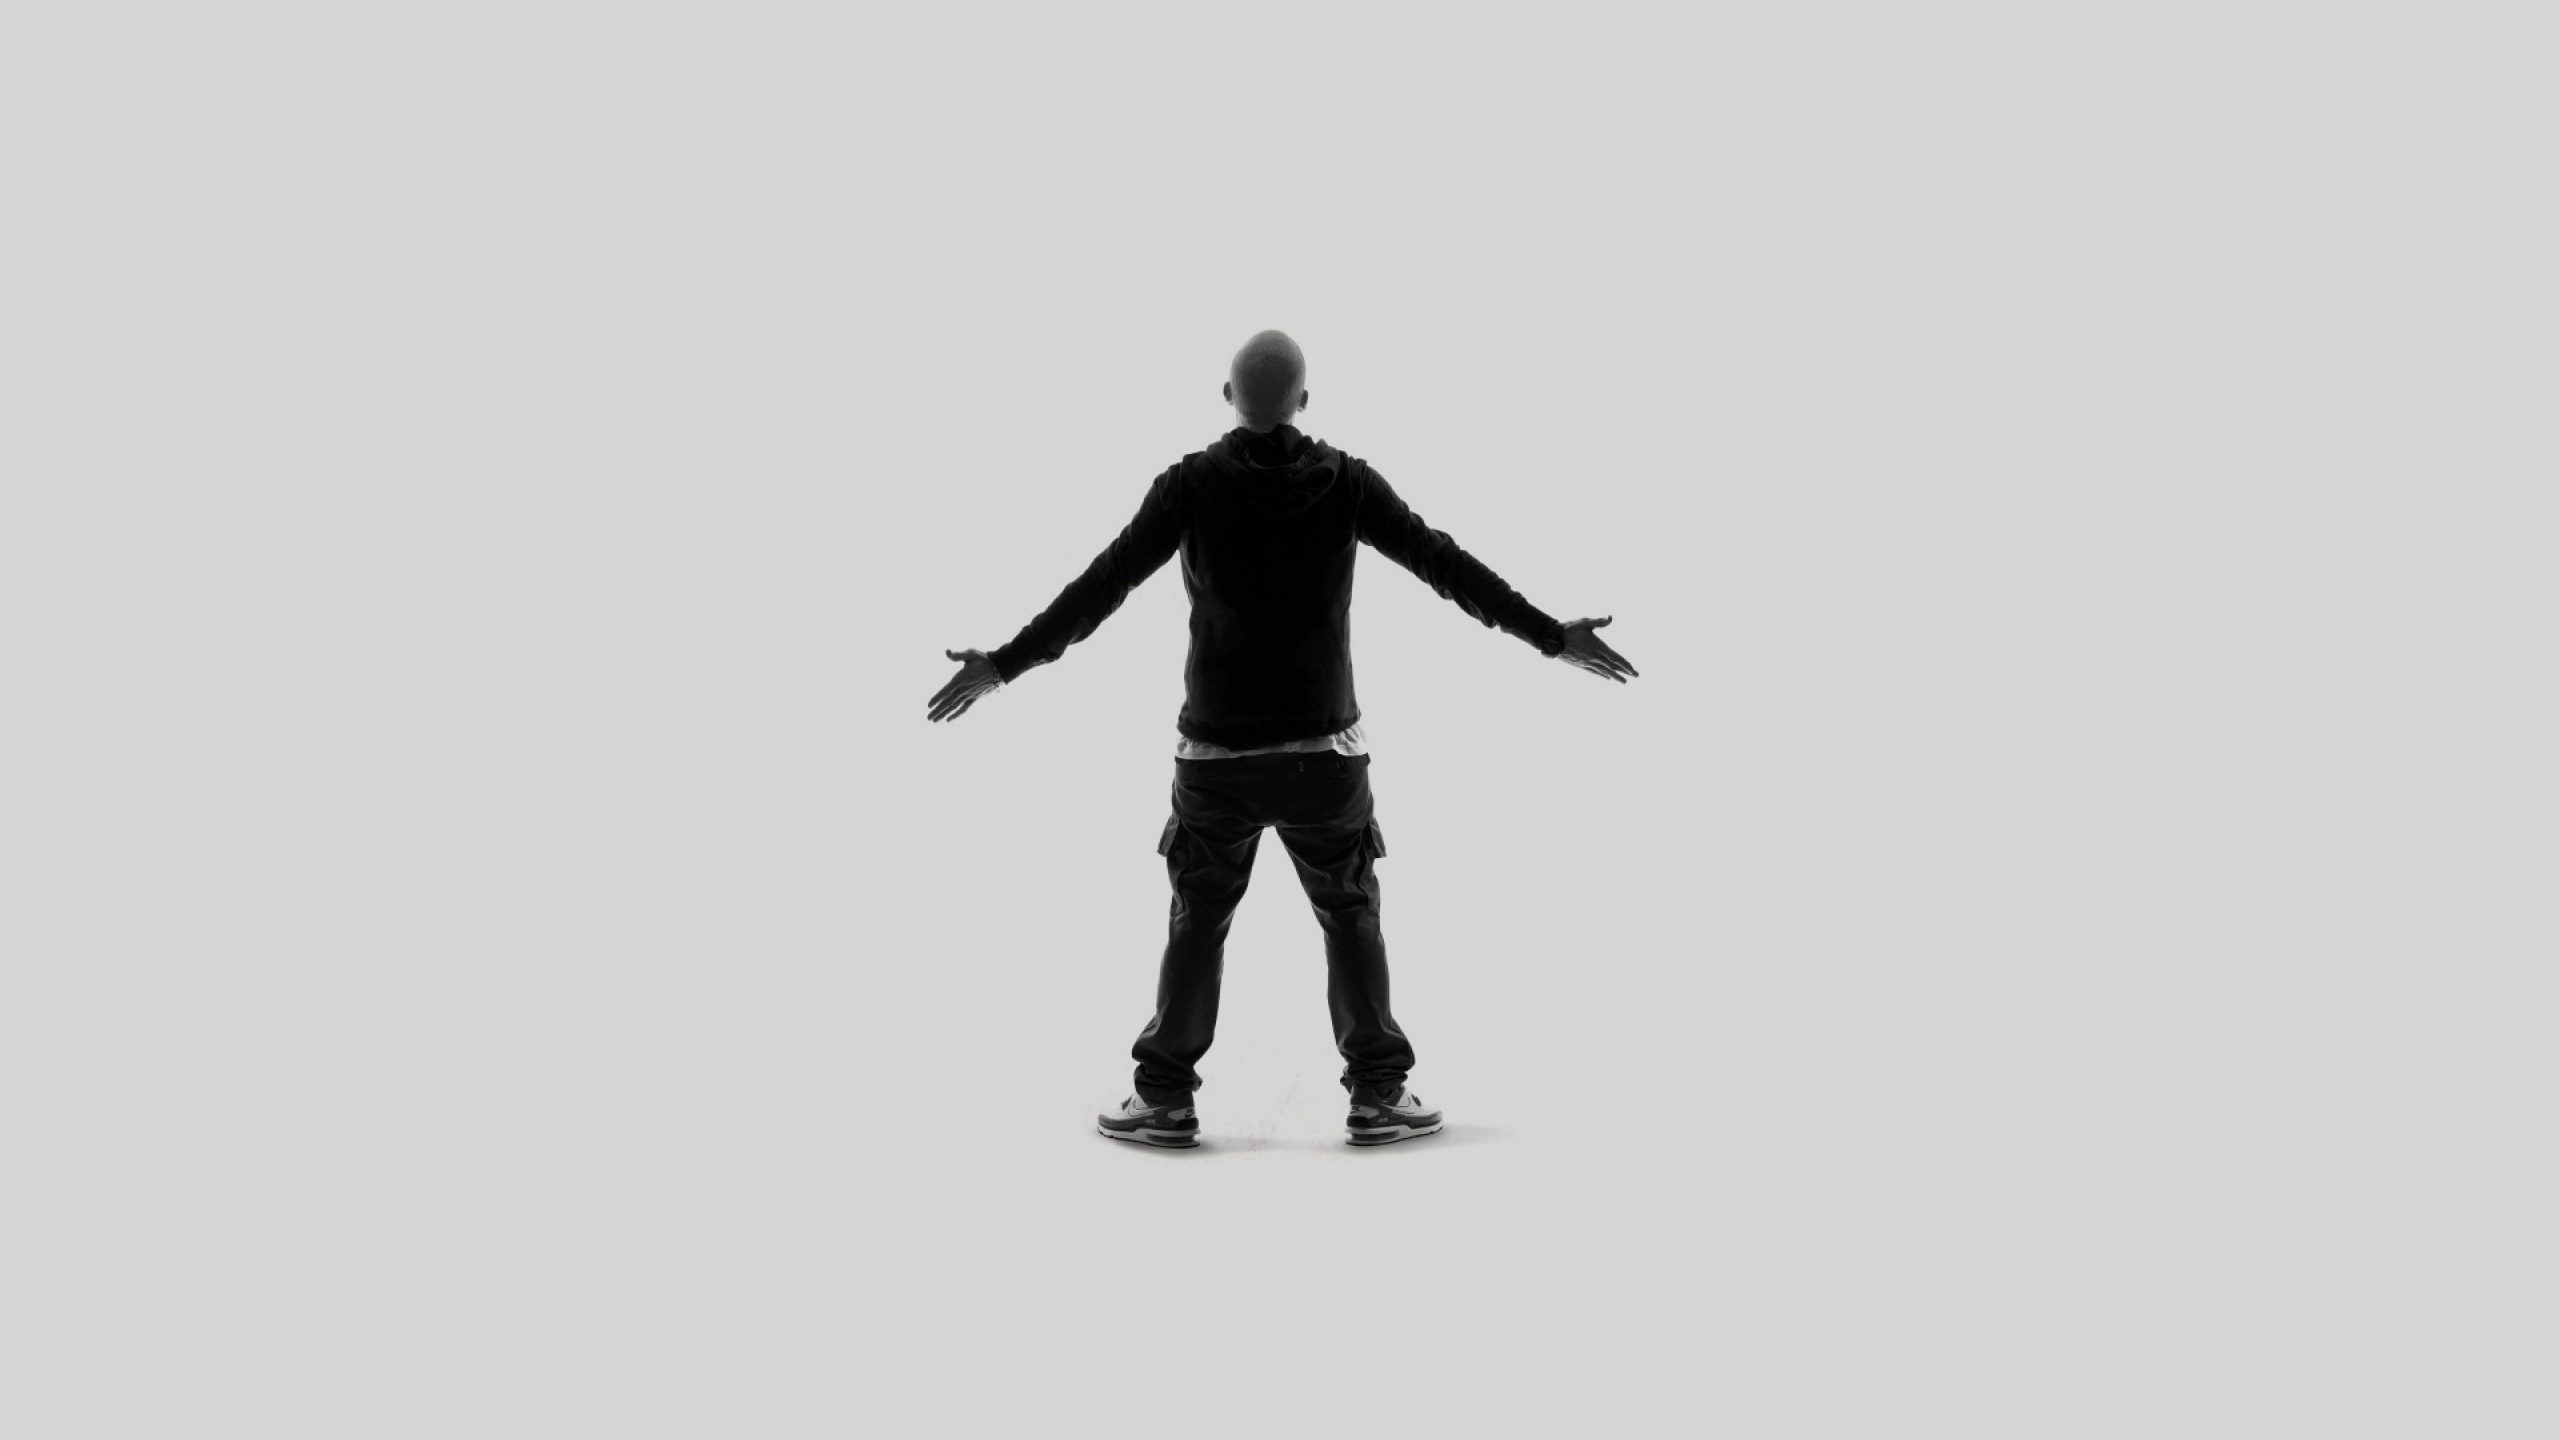 Wallpaper Eminem, Rapper